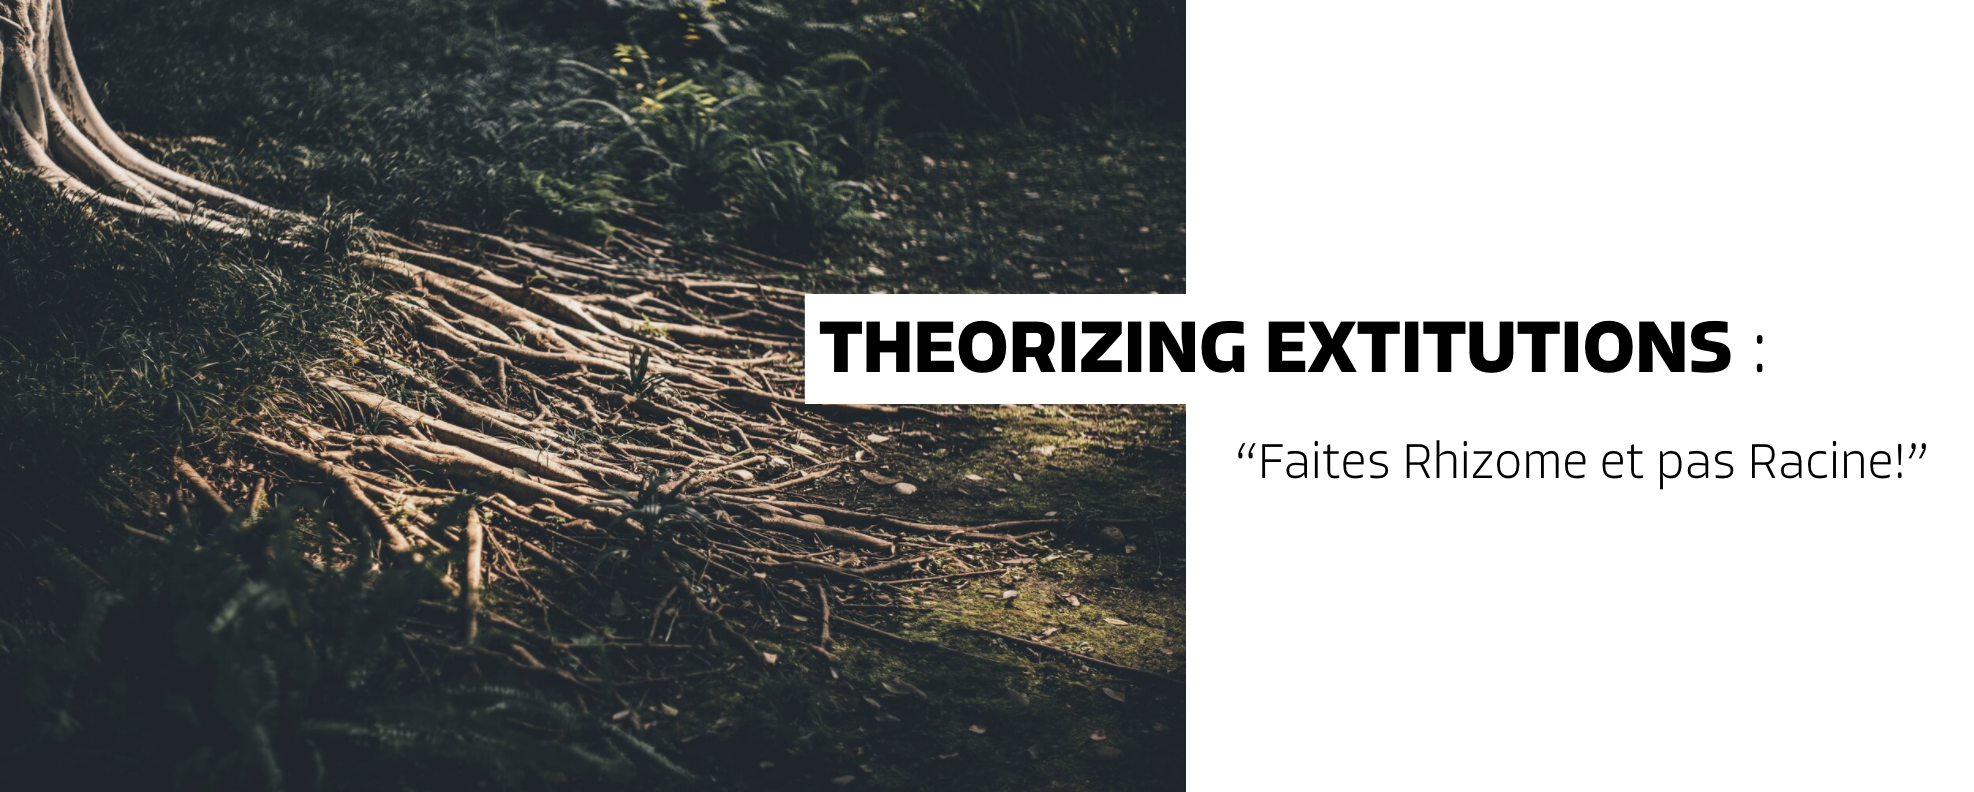 Theorizing Extitutions : Faites Rhizome et pas Racine!